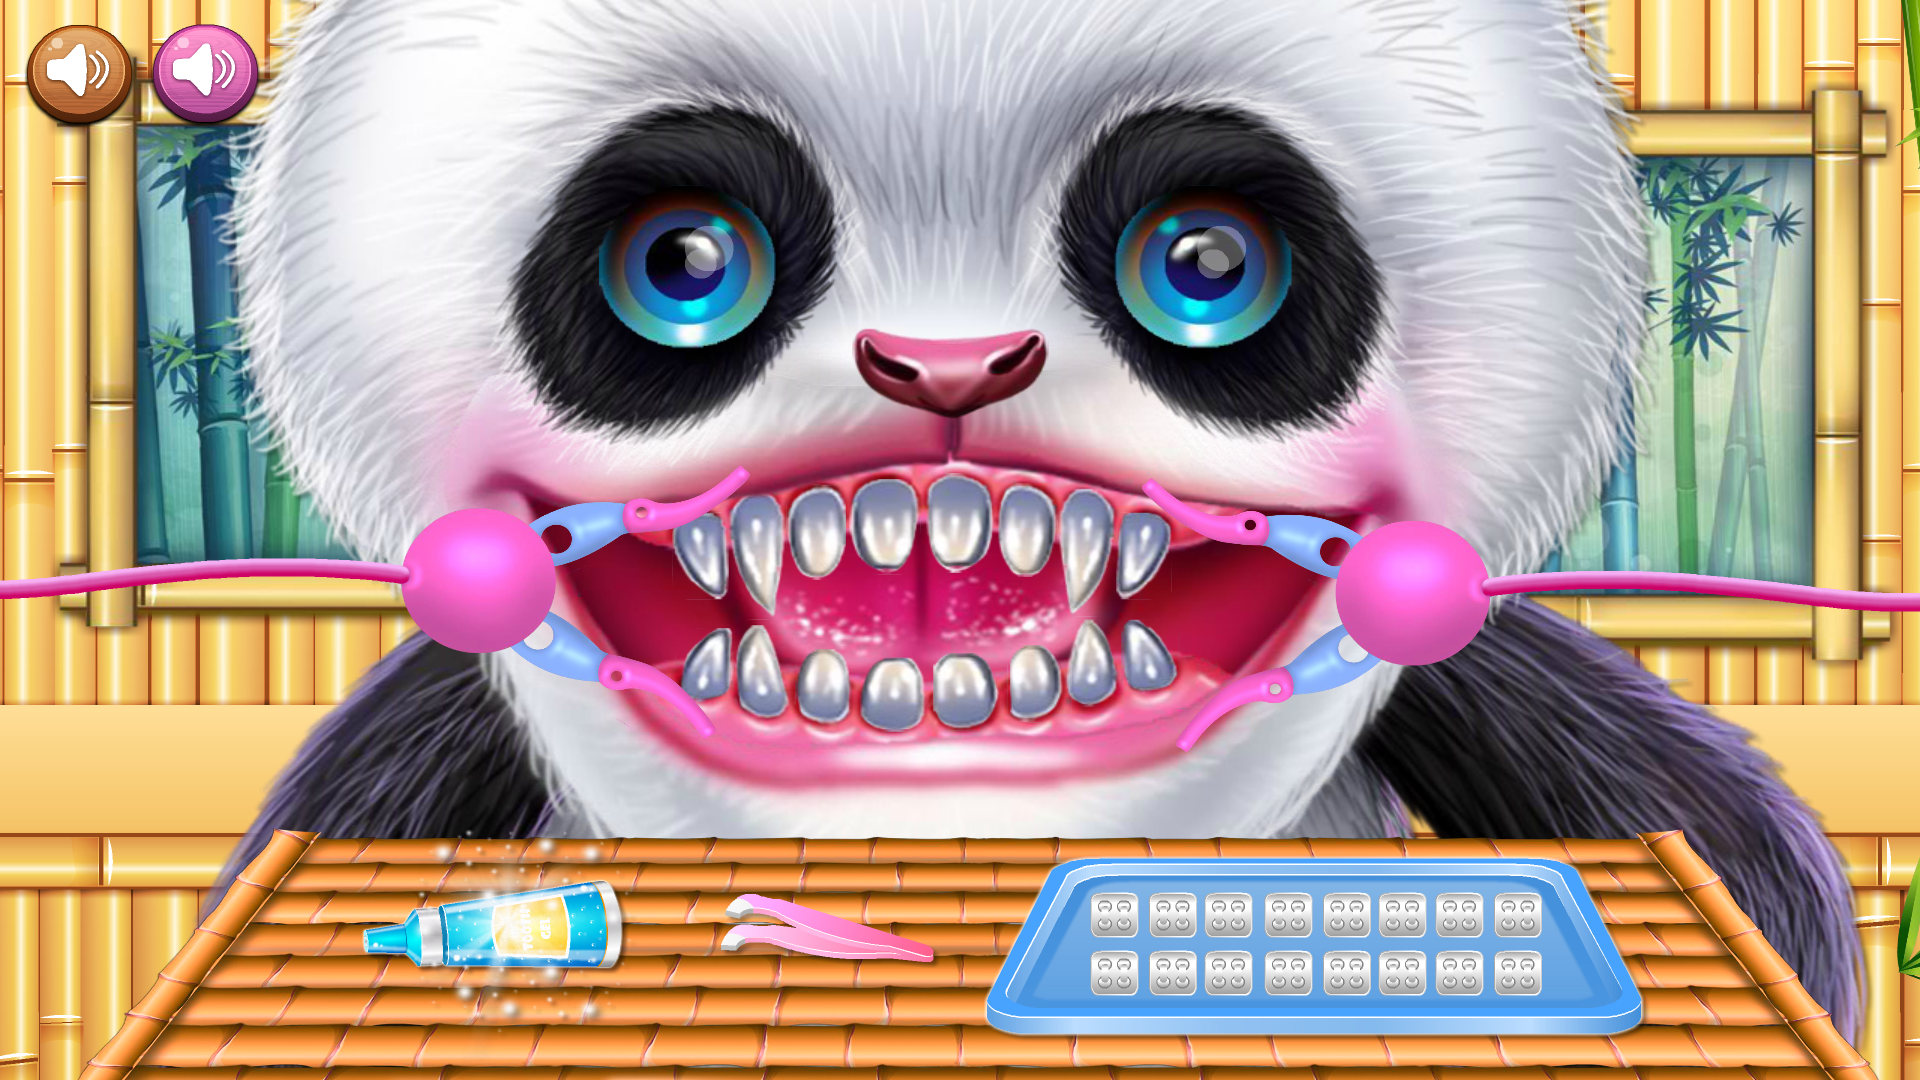 Cute Little Panda Dentist Care ภาพหน้าจอเกม